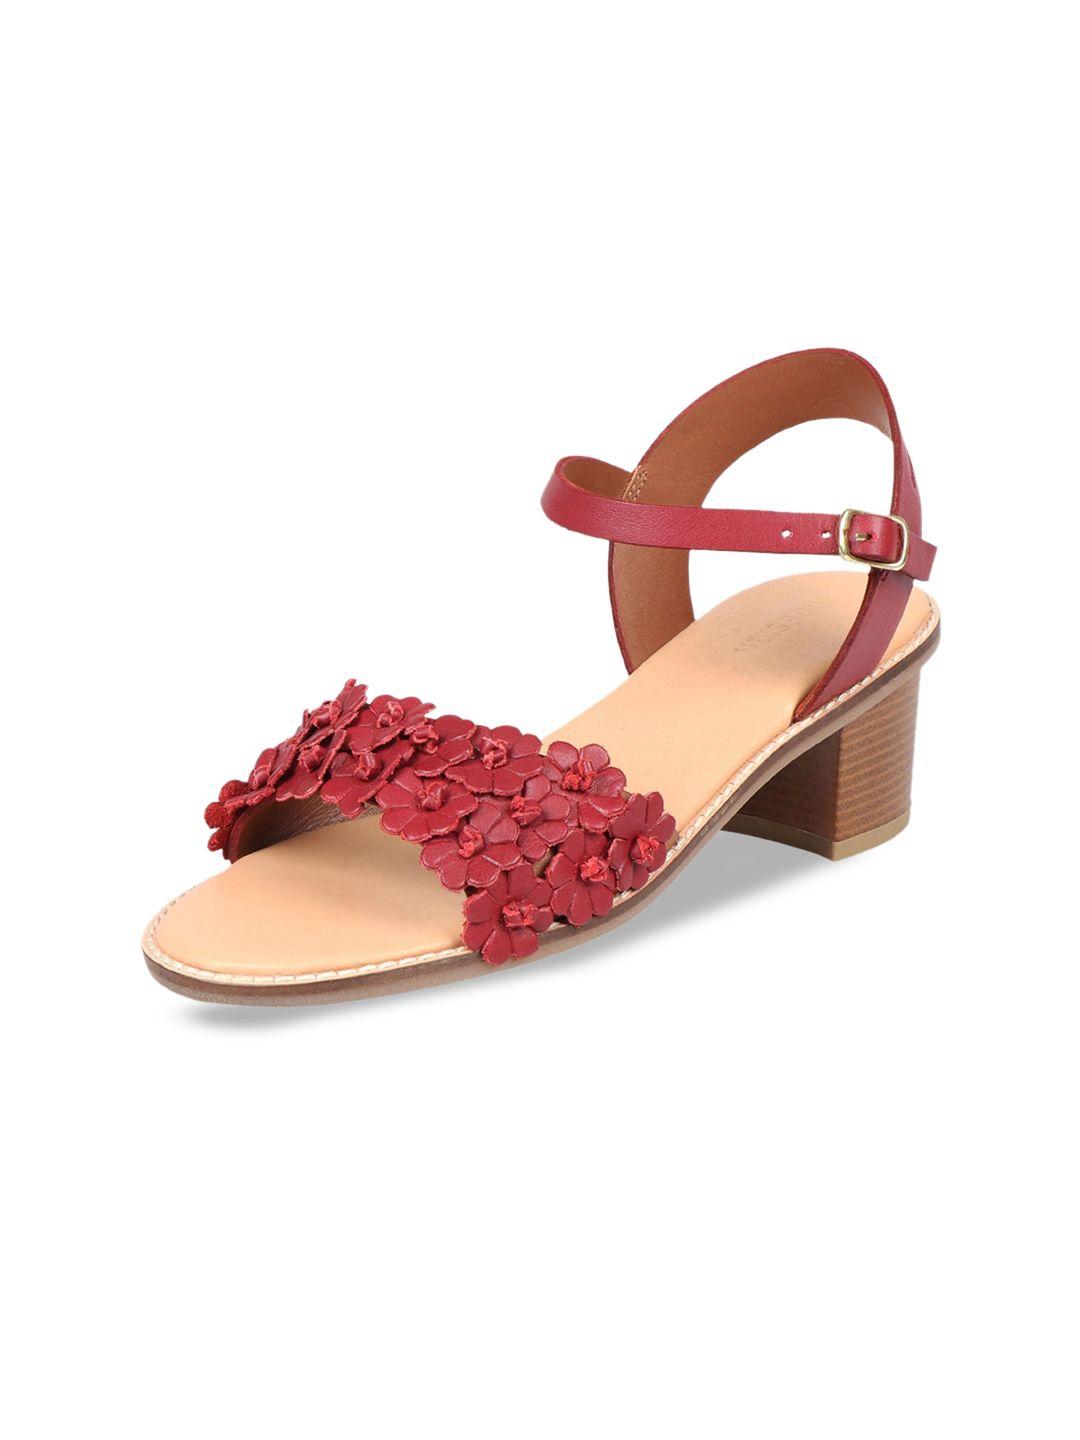 hidesign-aretha-embellished-leather-block-heels